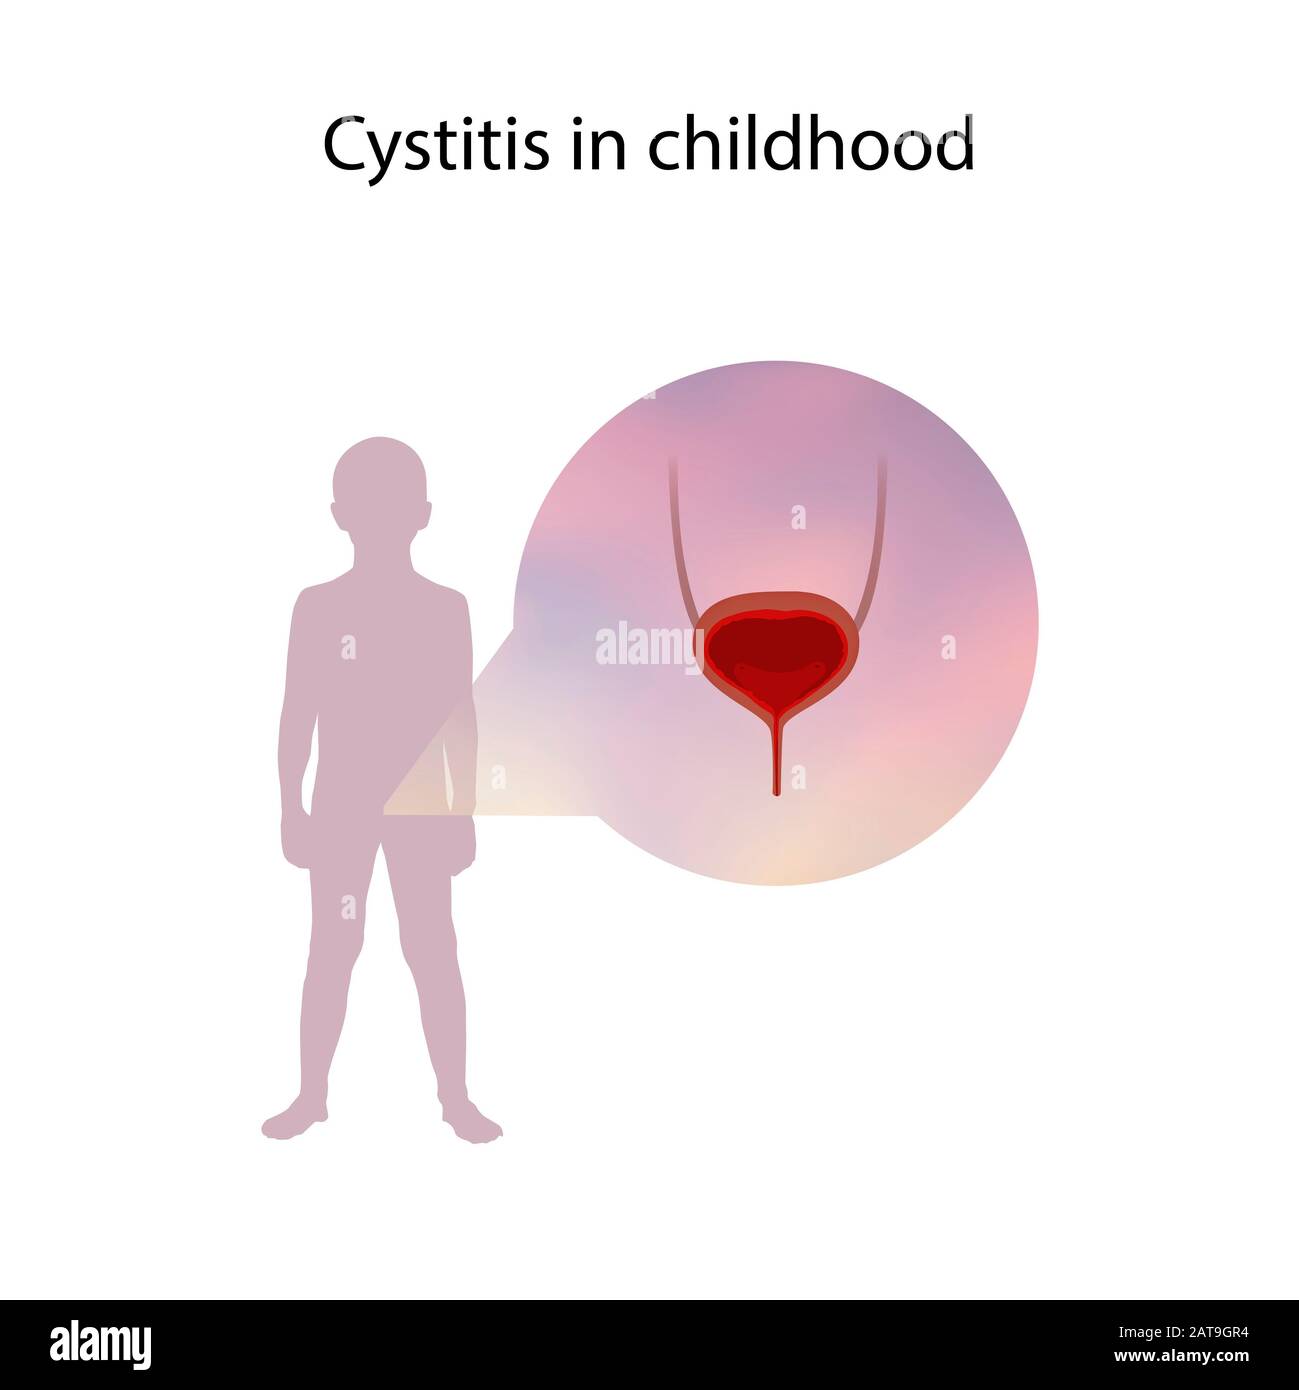 Cystitis in childhood, illustration Stock Photo